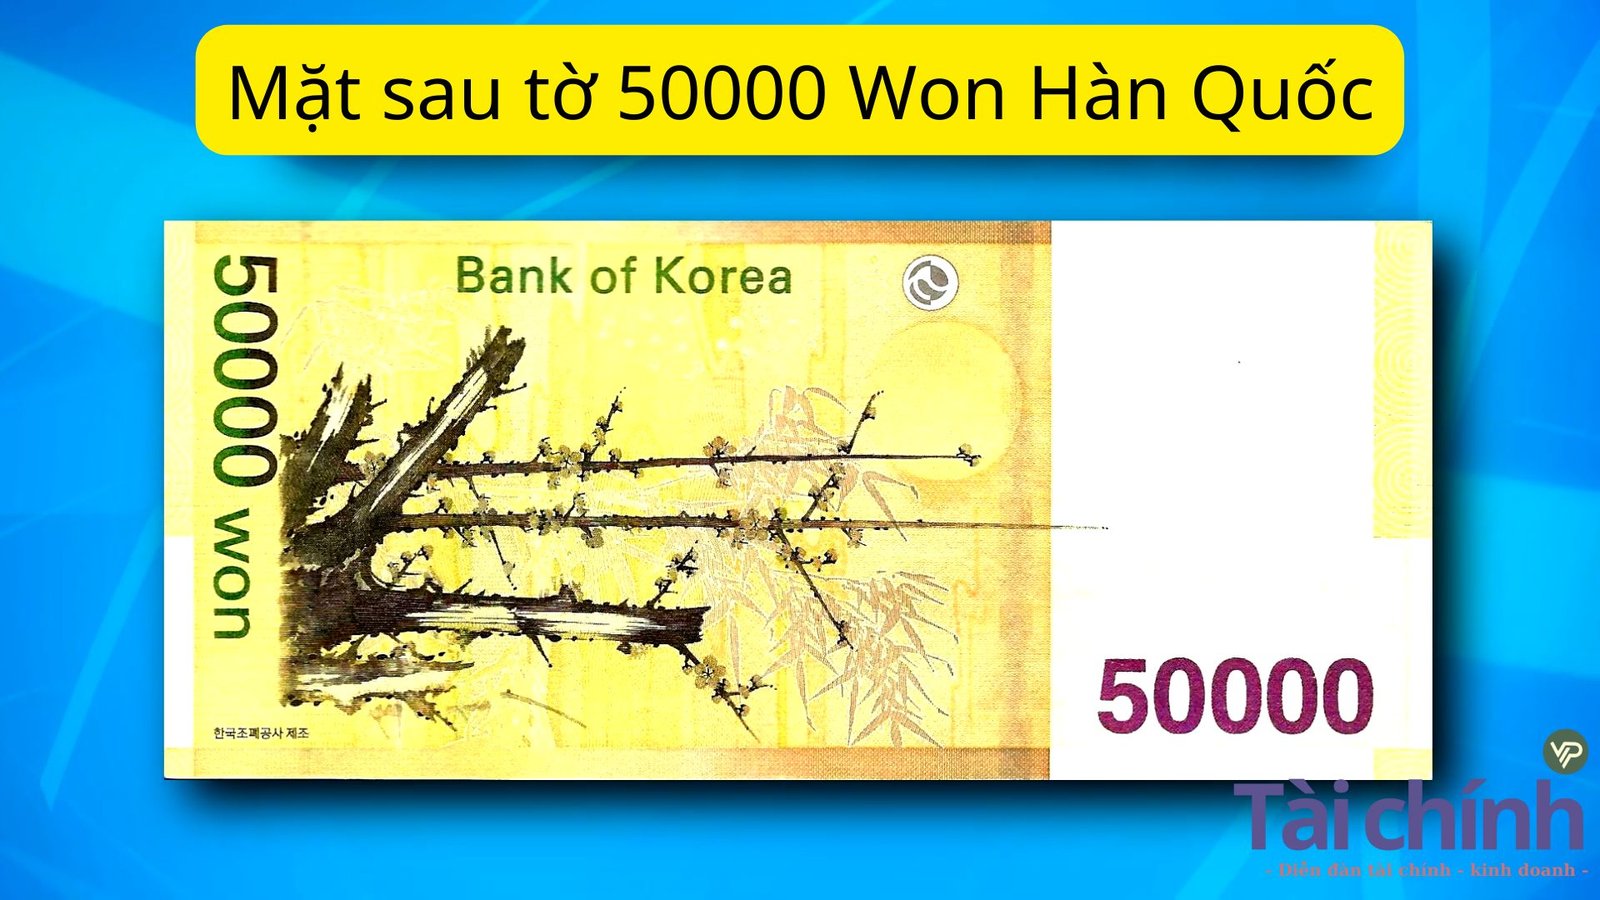 Mặt sau tờ 50000 Won